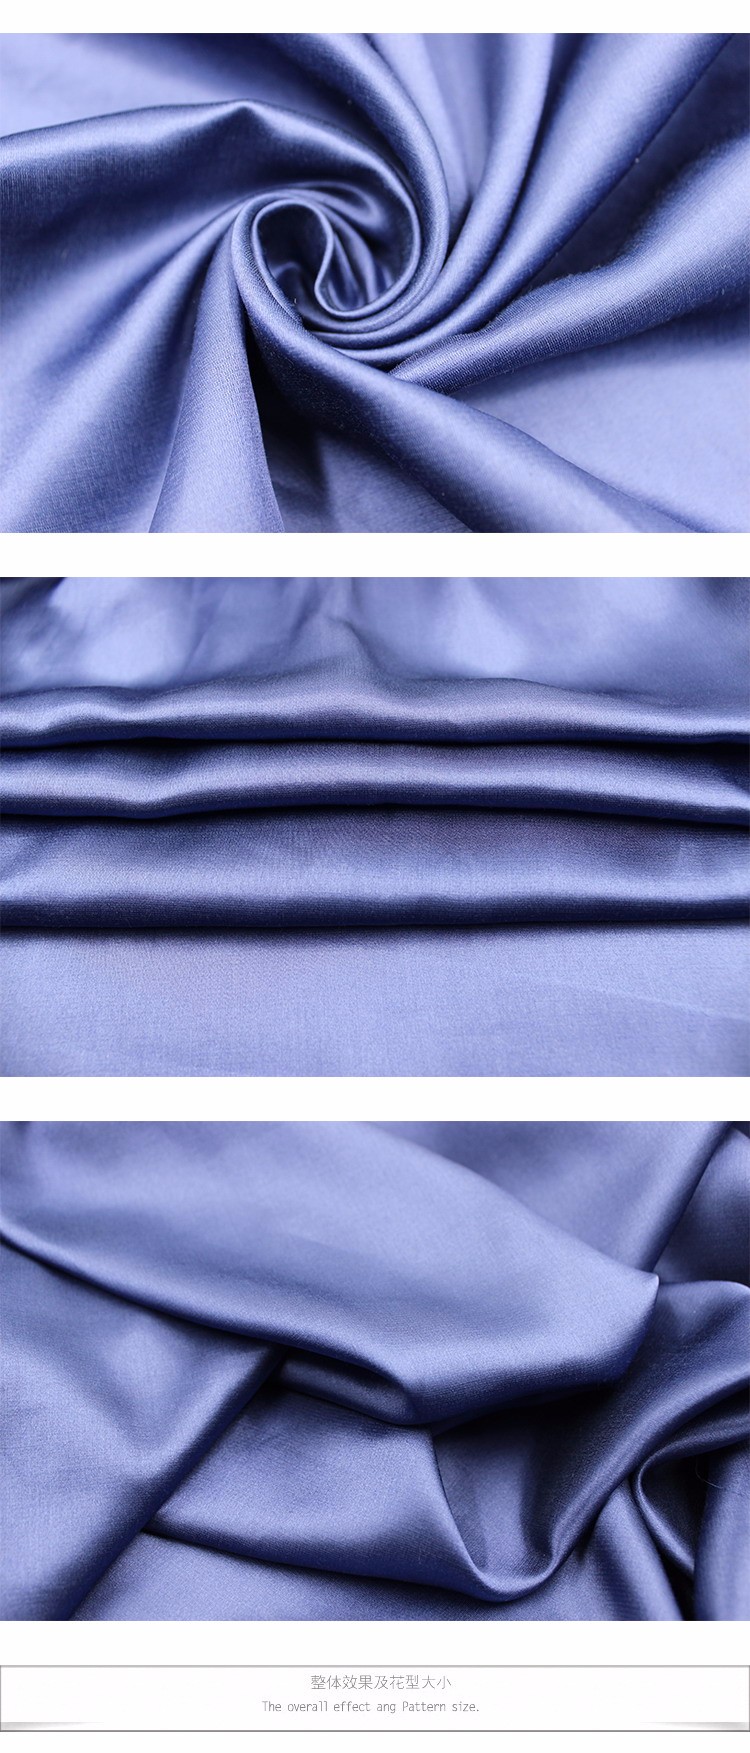 Y28 Silk Satin 50% Mulberry silk 50% cotton fabric for t sleepwear